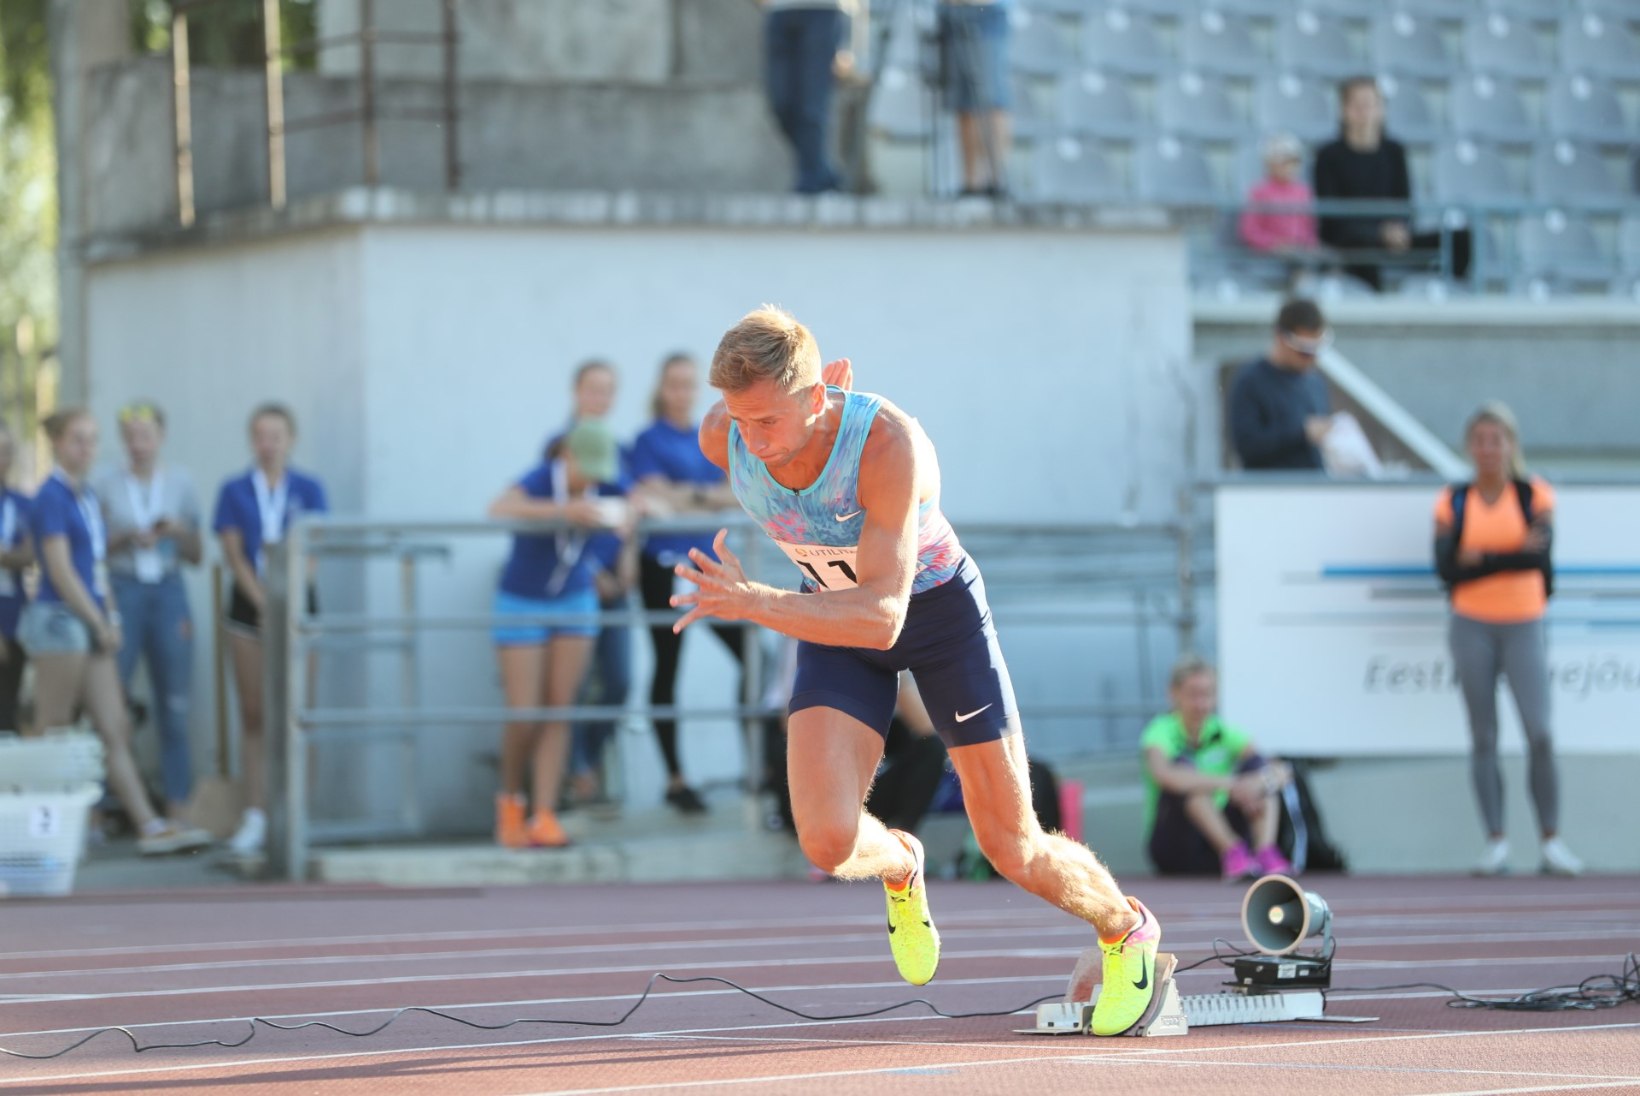 Eesti parim meessportlane Rasmus Mägi: tegin endale pisut haiget